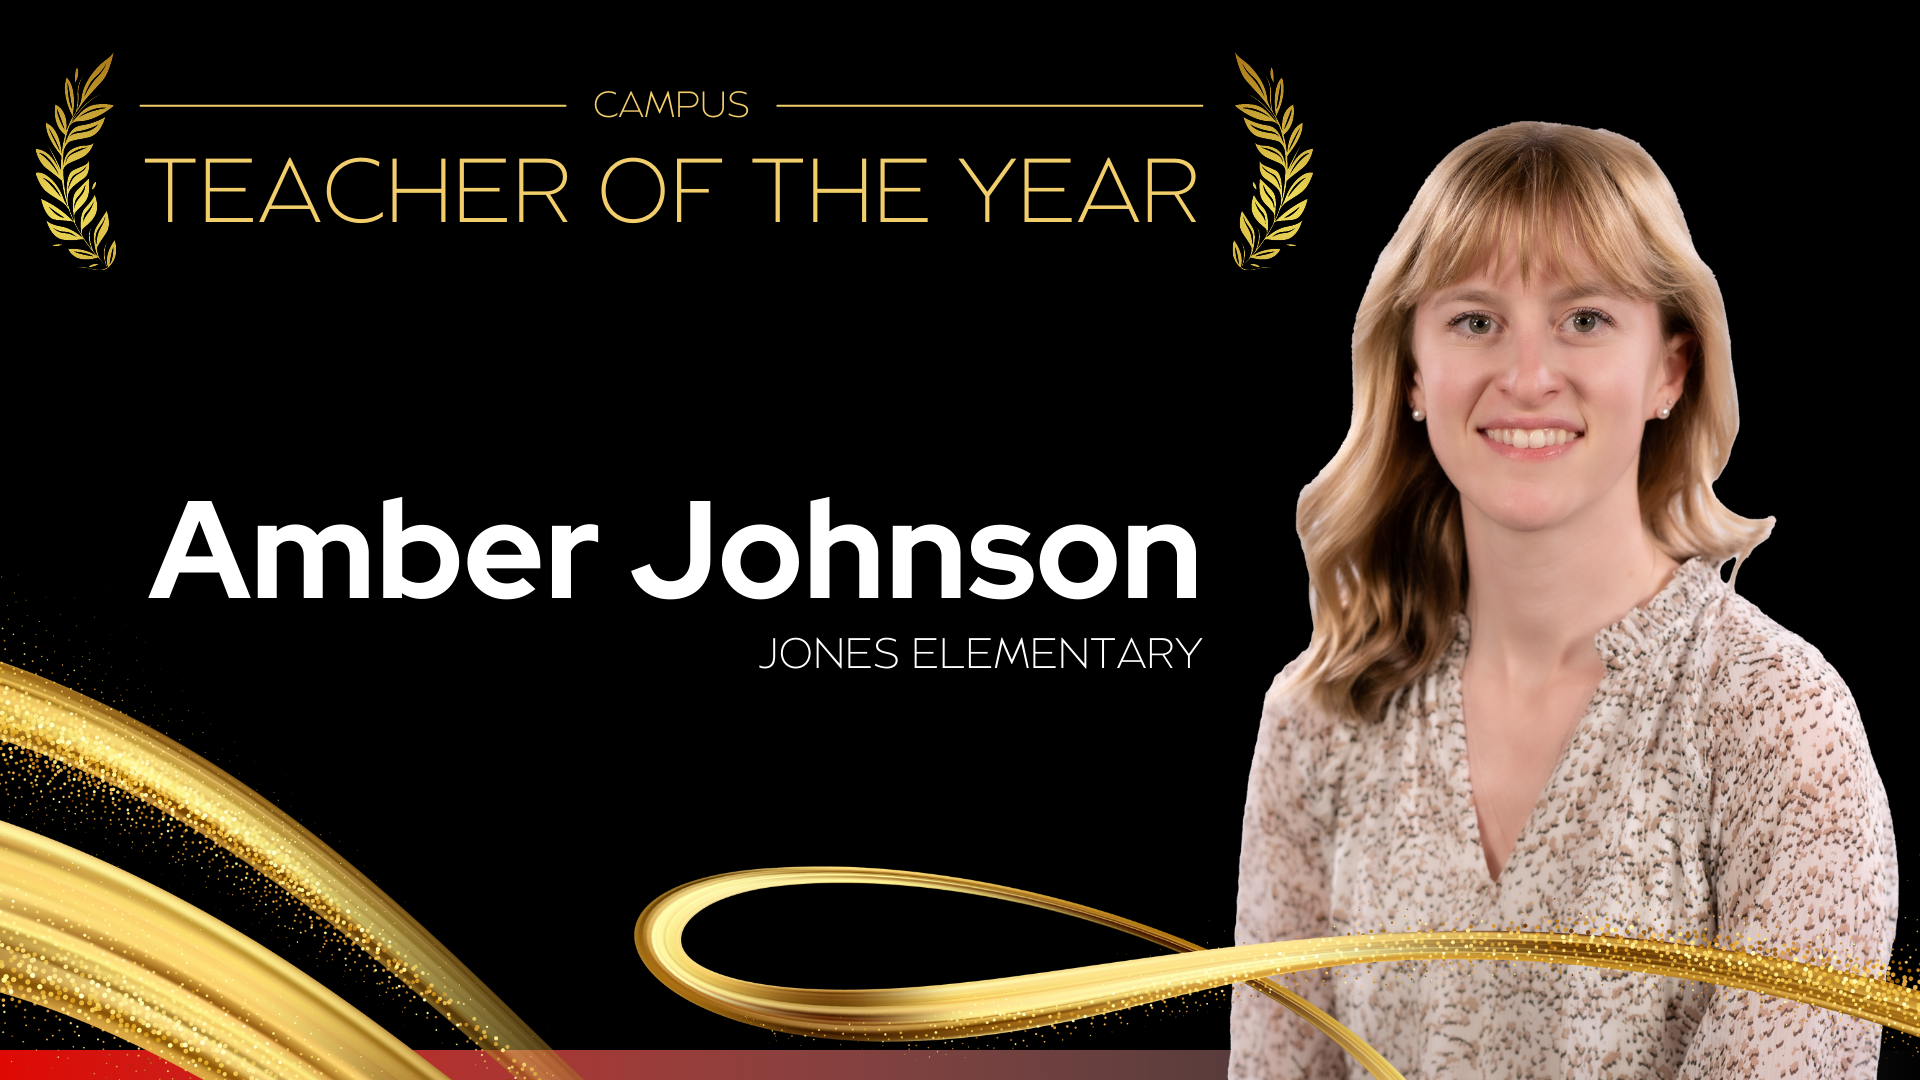 Campus Teacher of the year Jones Elementary School - Amber Johnson 